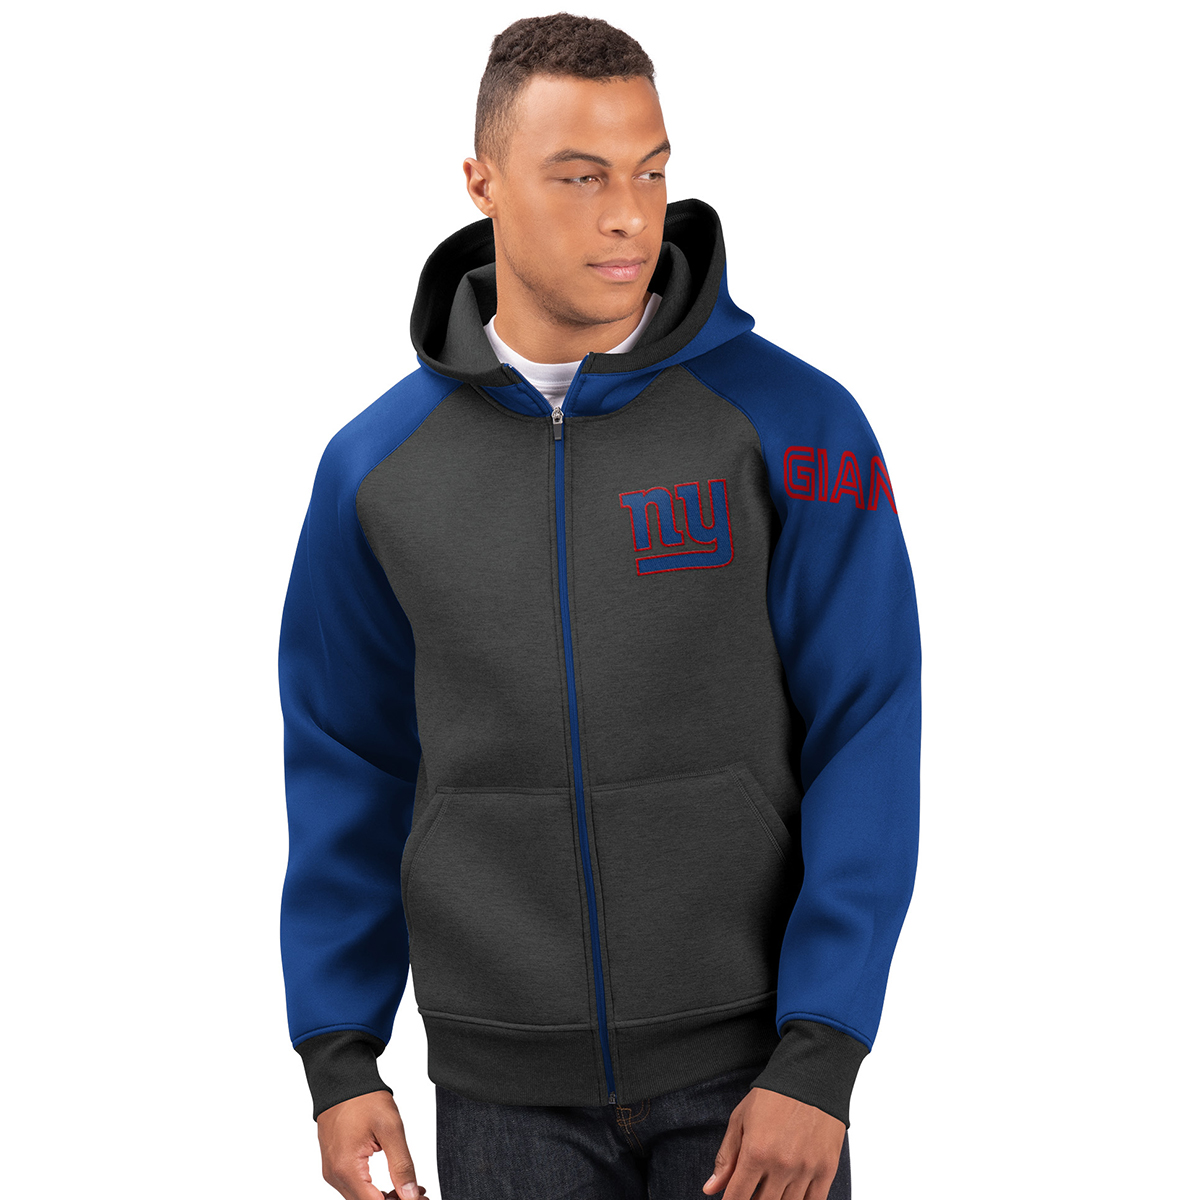 New York Giants Men's Wild Card Full Zip Hooded Jacket - Black, XL